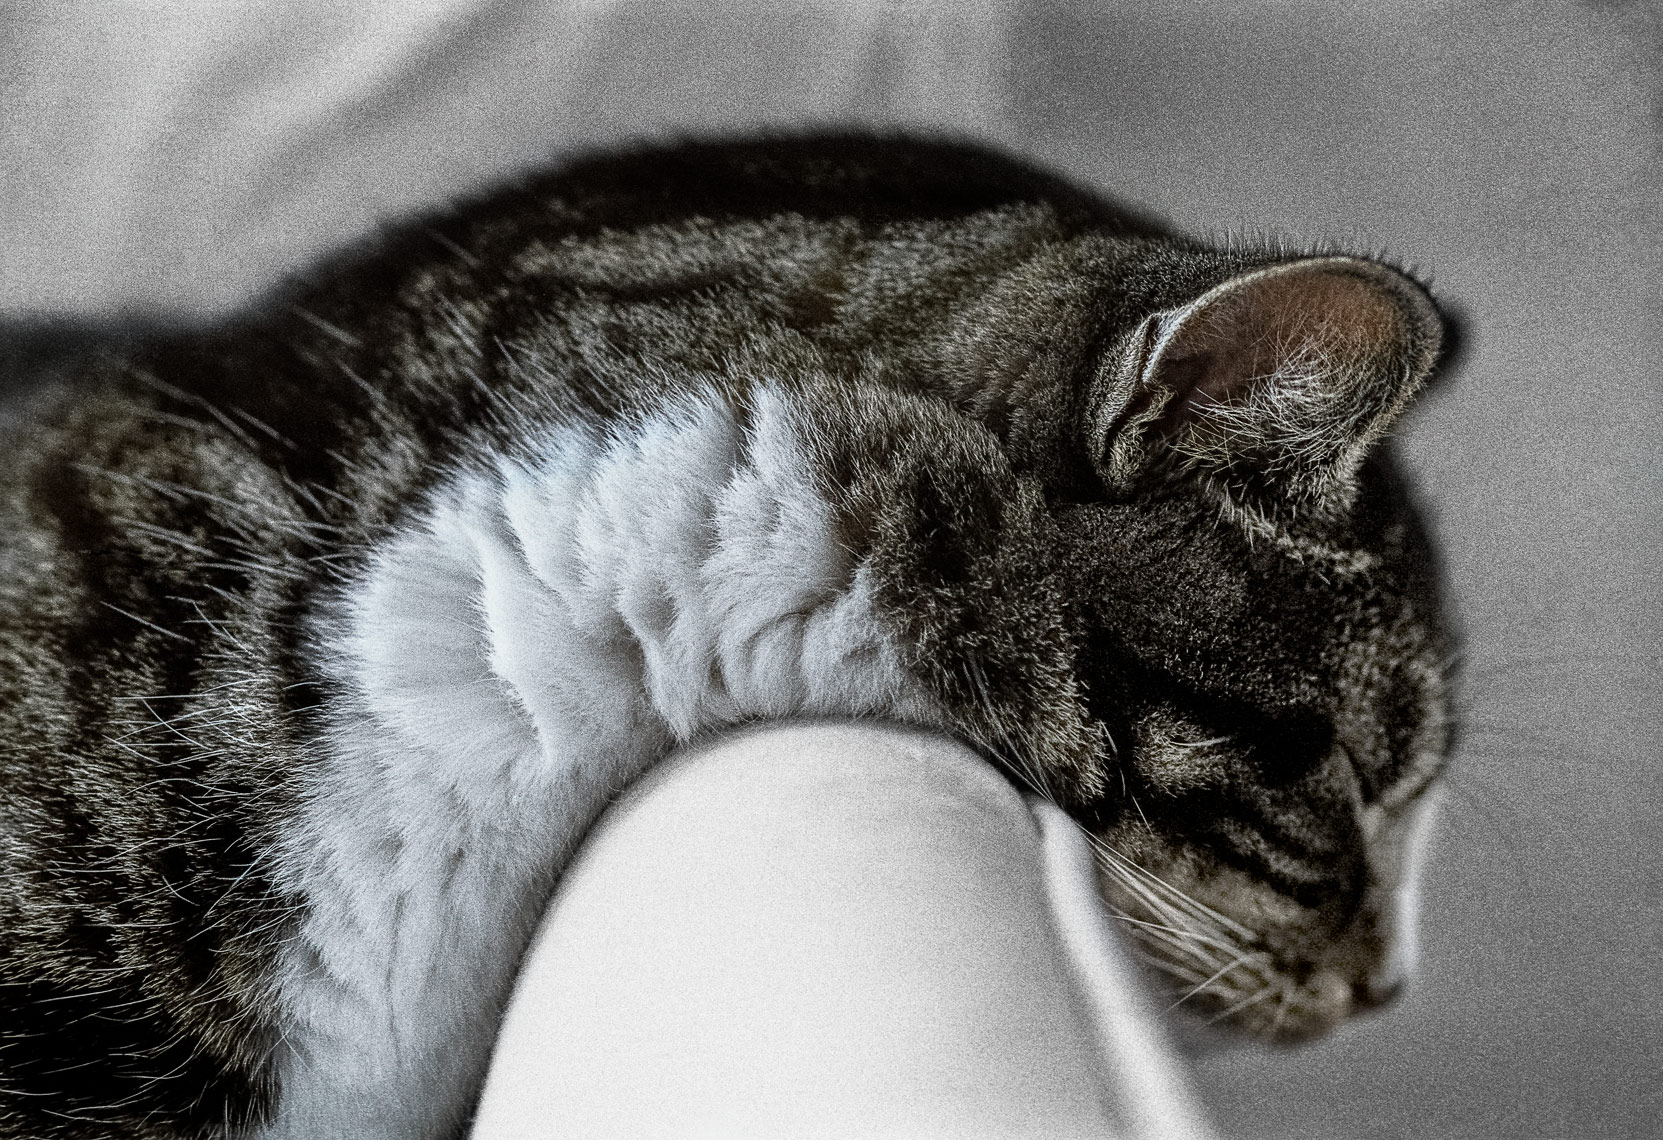 David Lebe; Neck, 1999, cat photograph